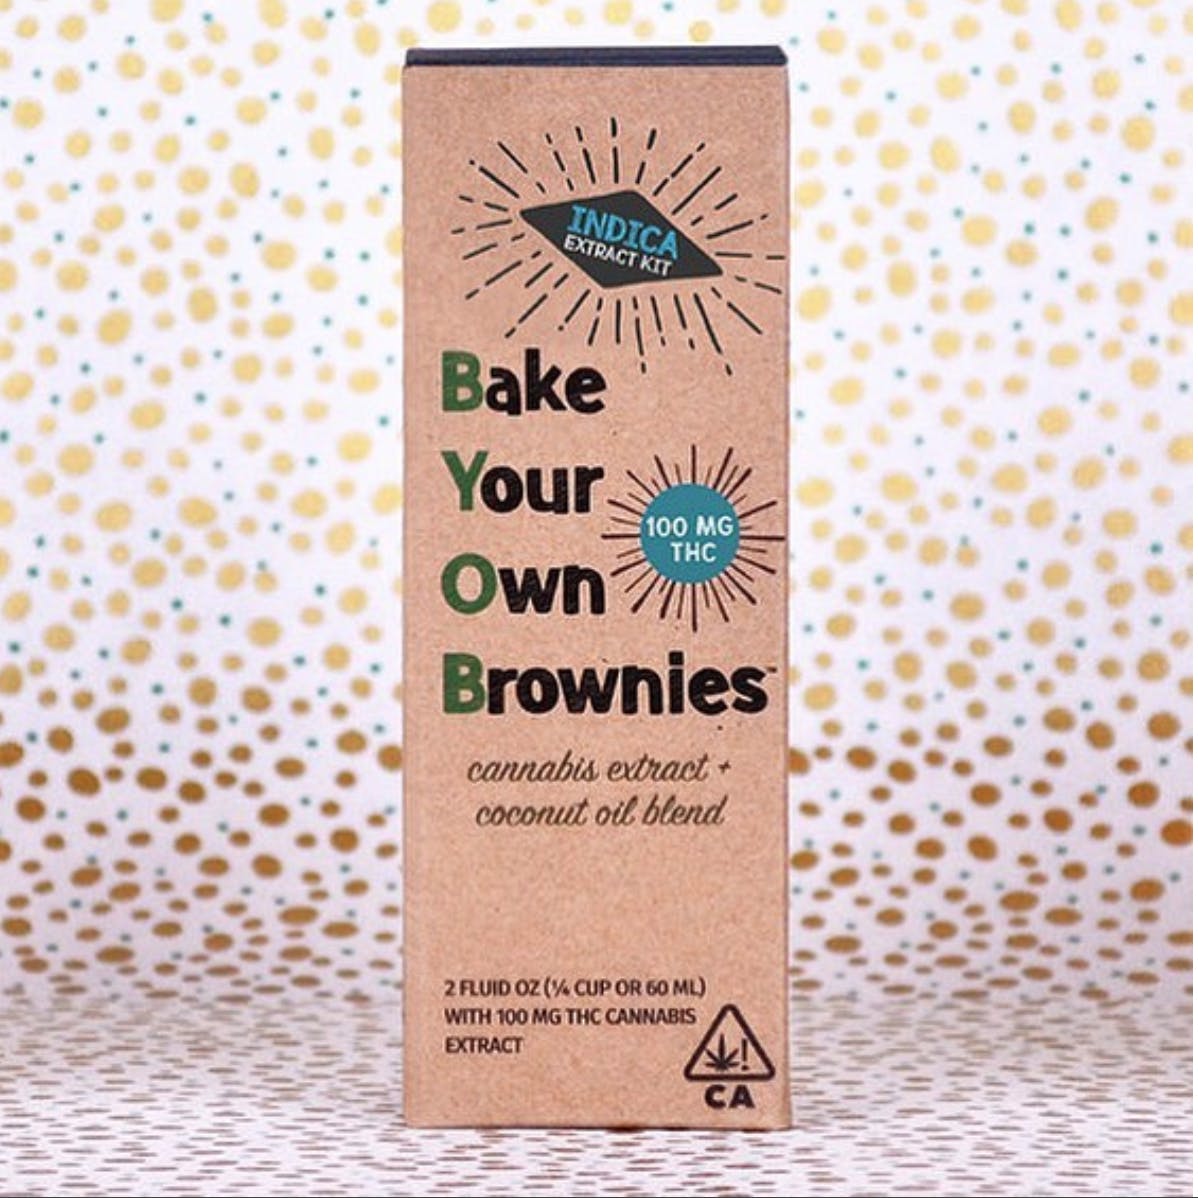 BYOB Indica Bake Your Own Brownies Kit